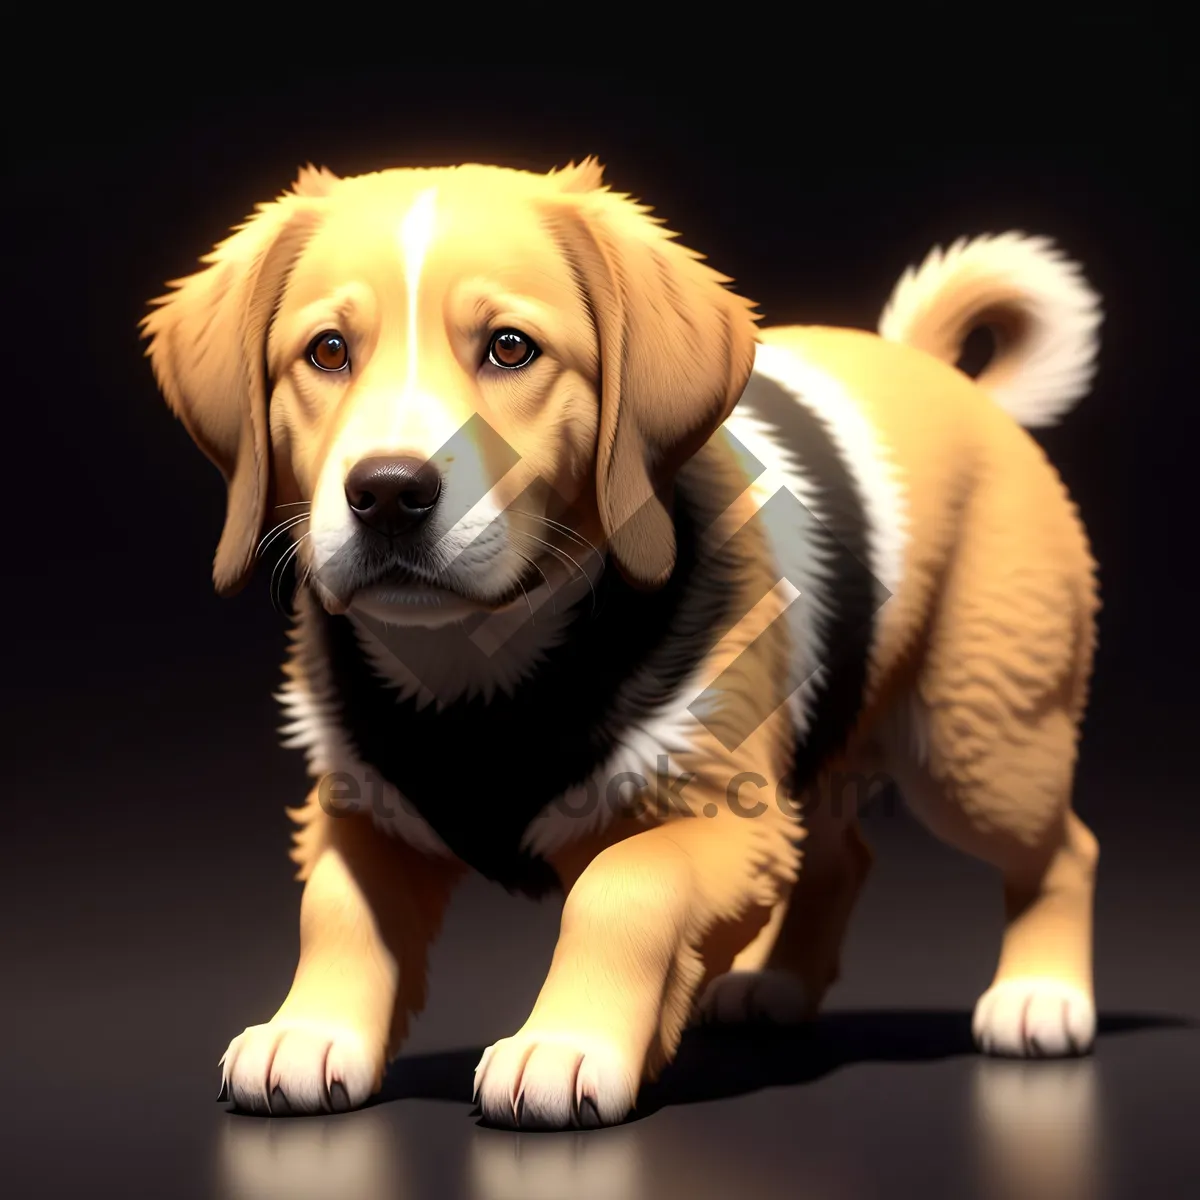 Picture of Golden Retriever Puppy: Adorable Canine Friend in Studio Portrait